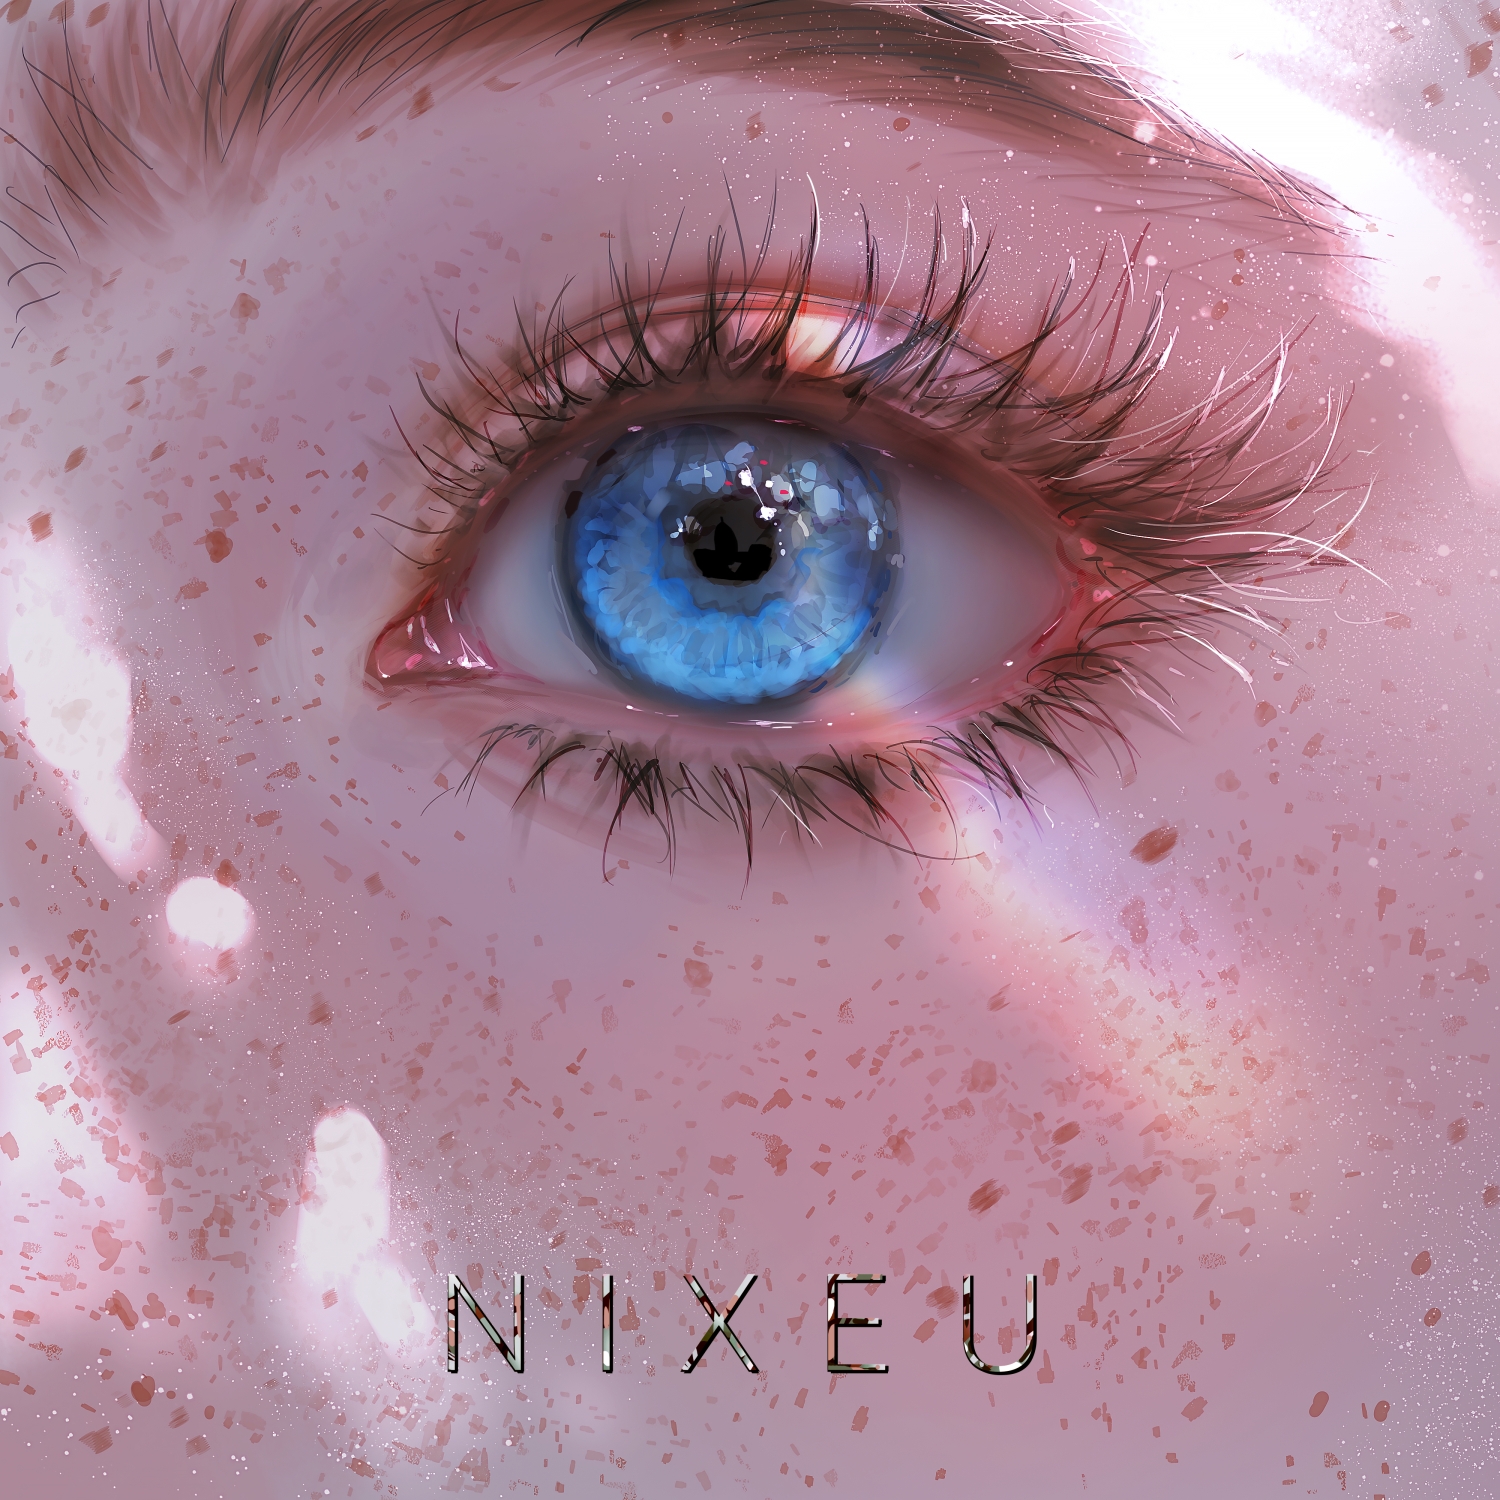 Anime 1500x1500 blue eyes sky closeup Nixeu freckles